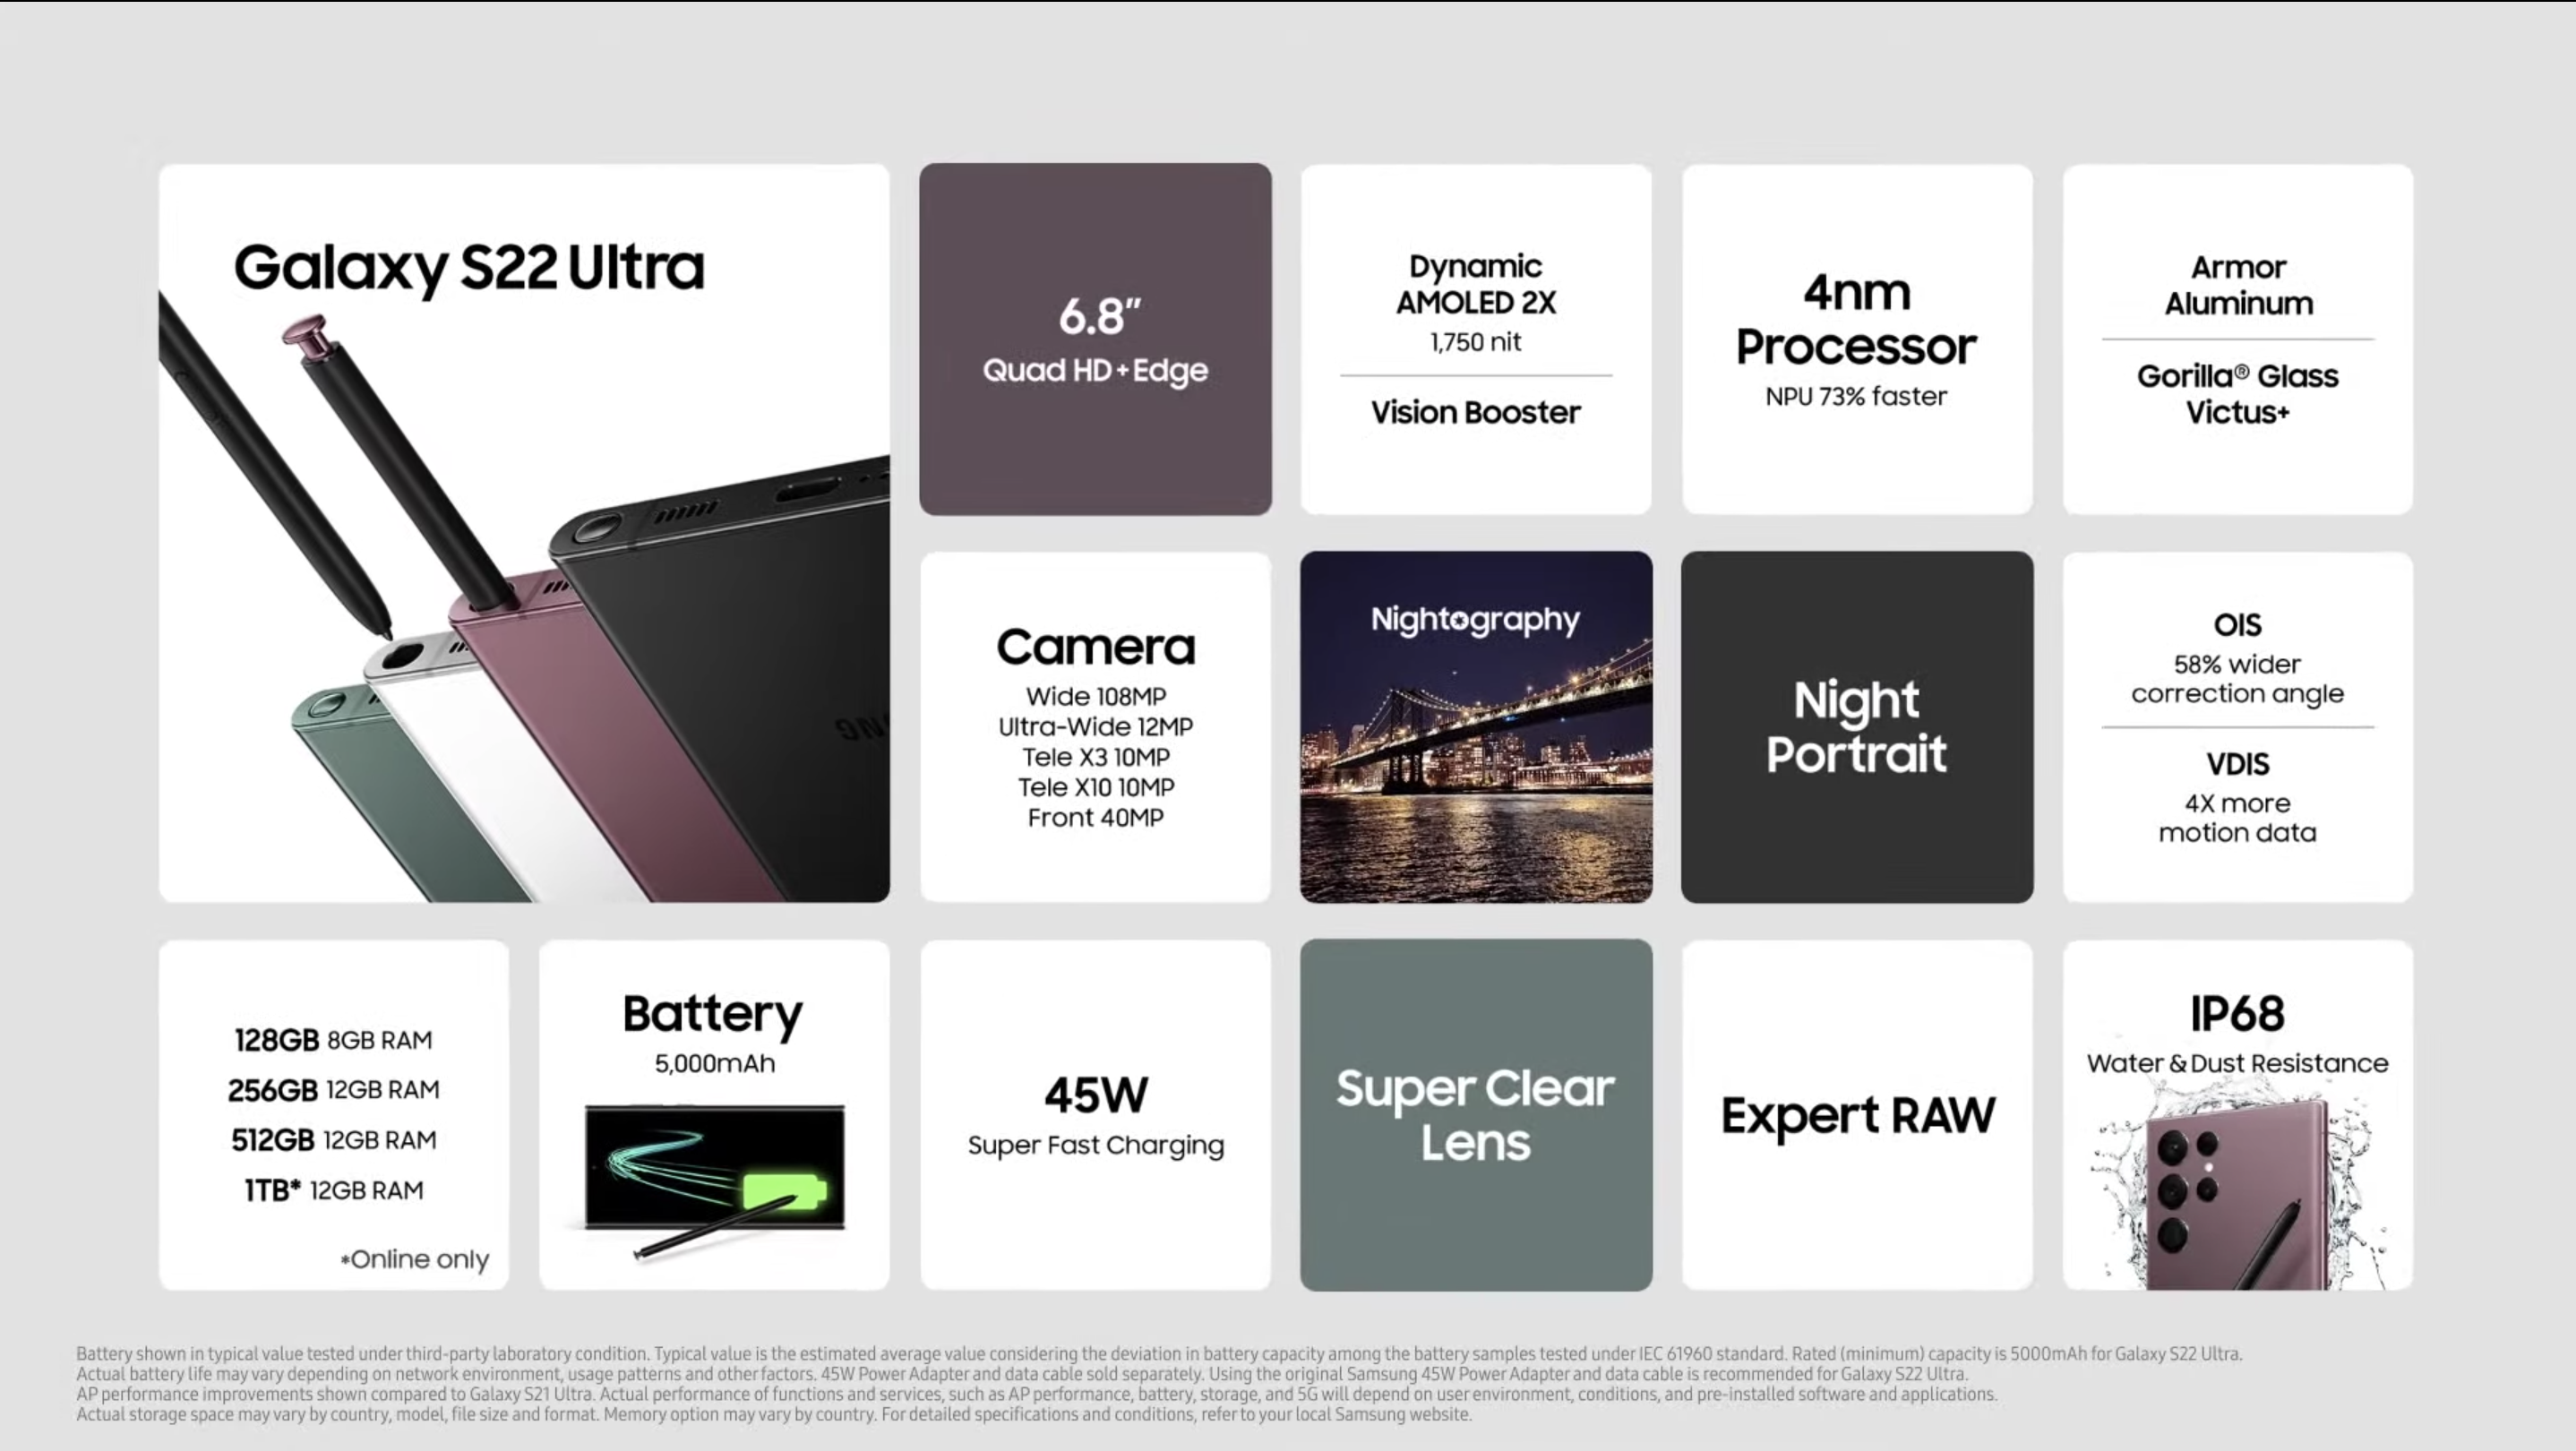 Samsung Galaxy S22 Ultra details